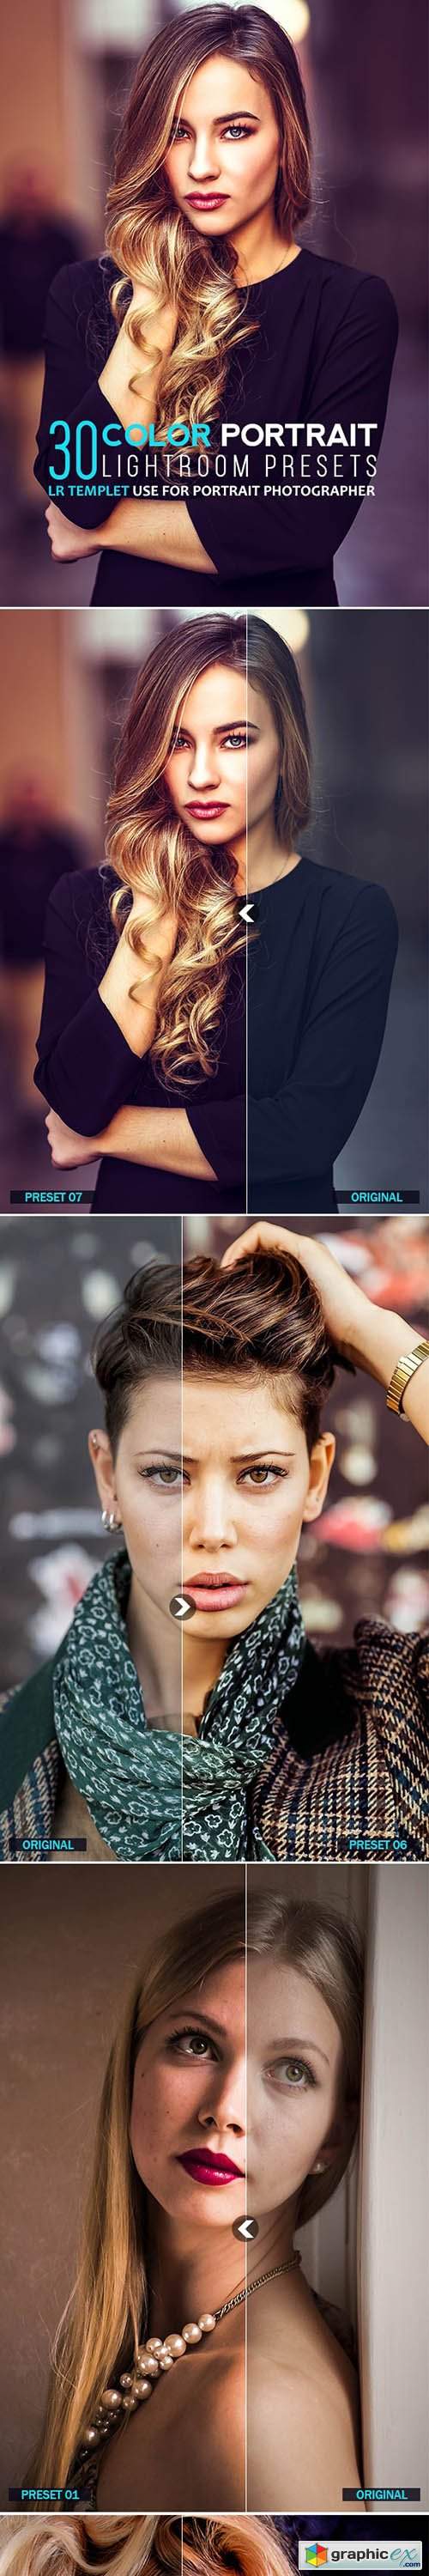 photoshop presets for portraits